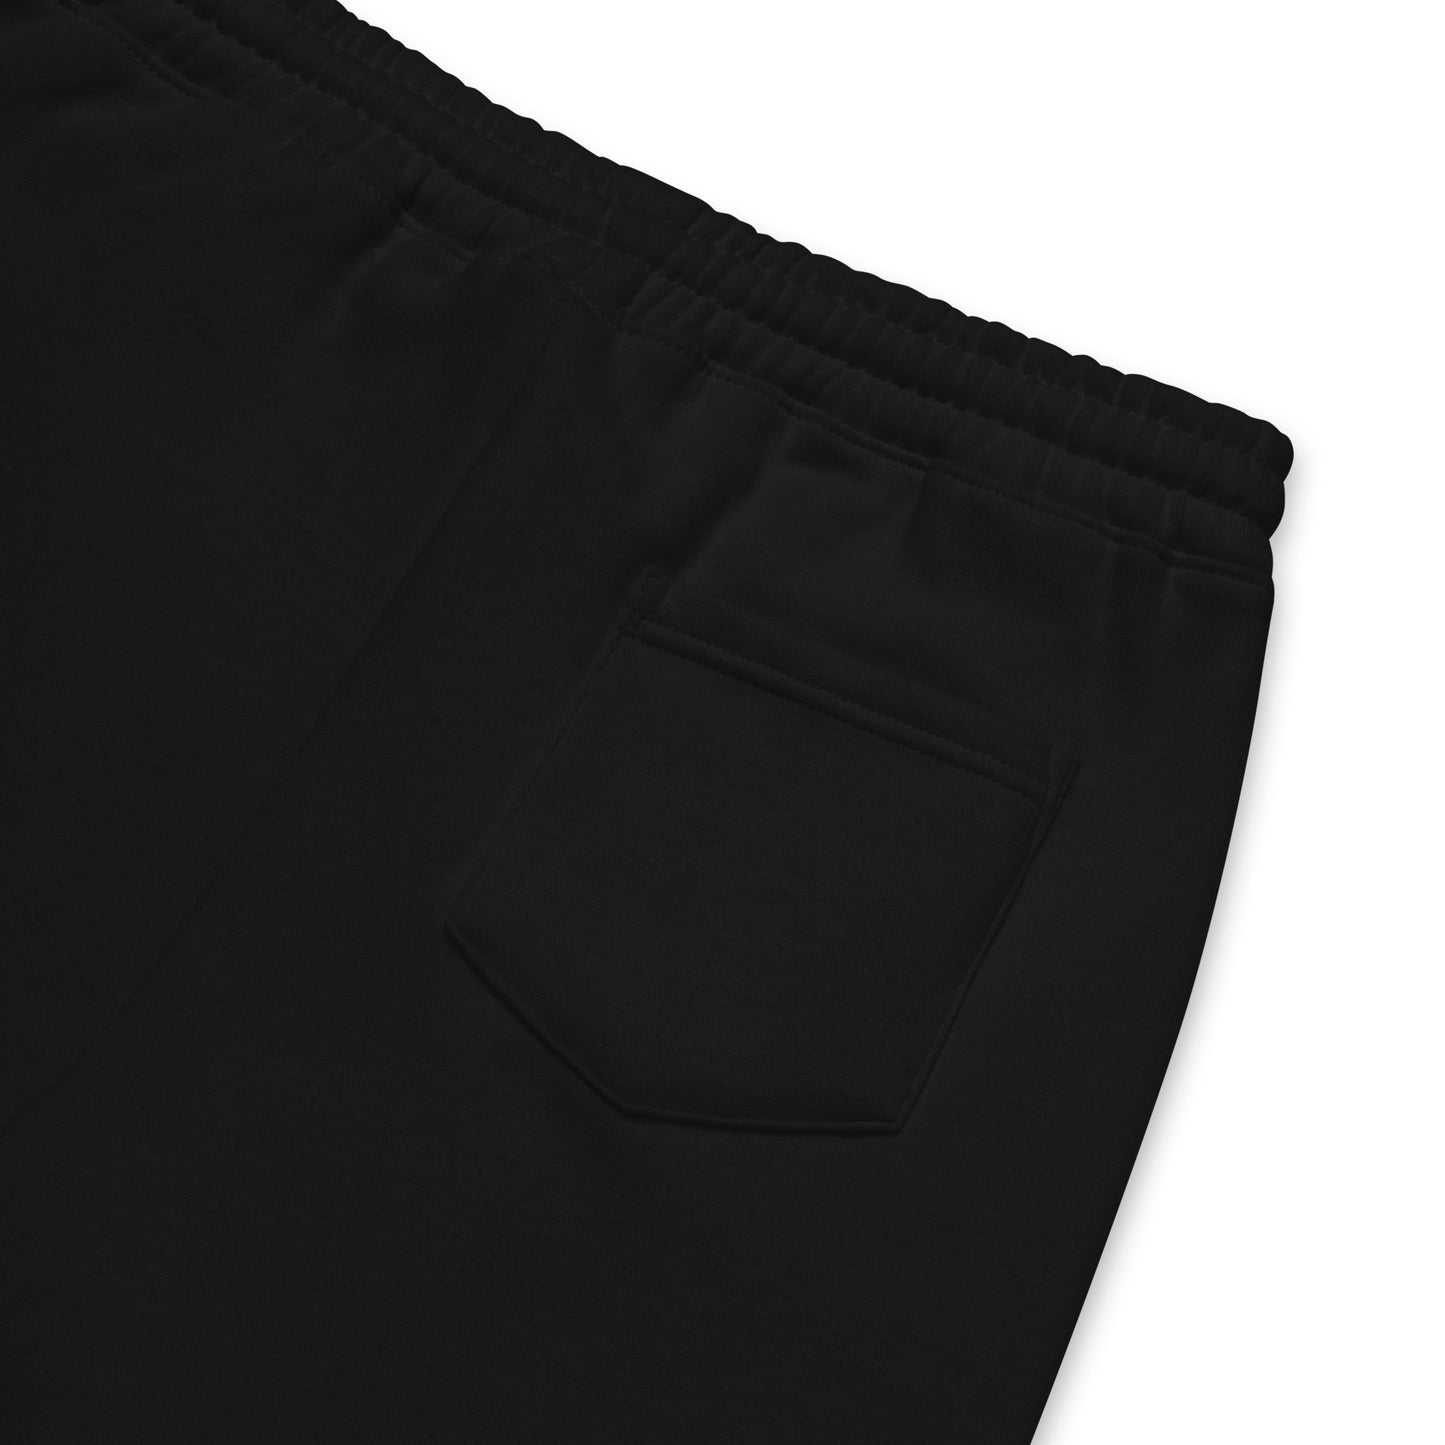 DB4900MFS Men's fleece shorts